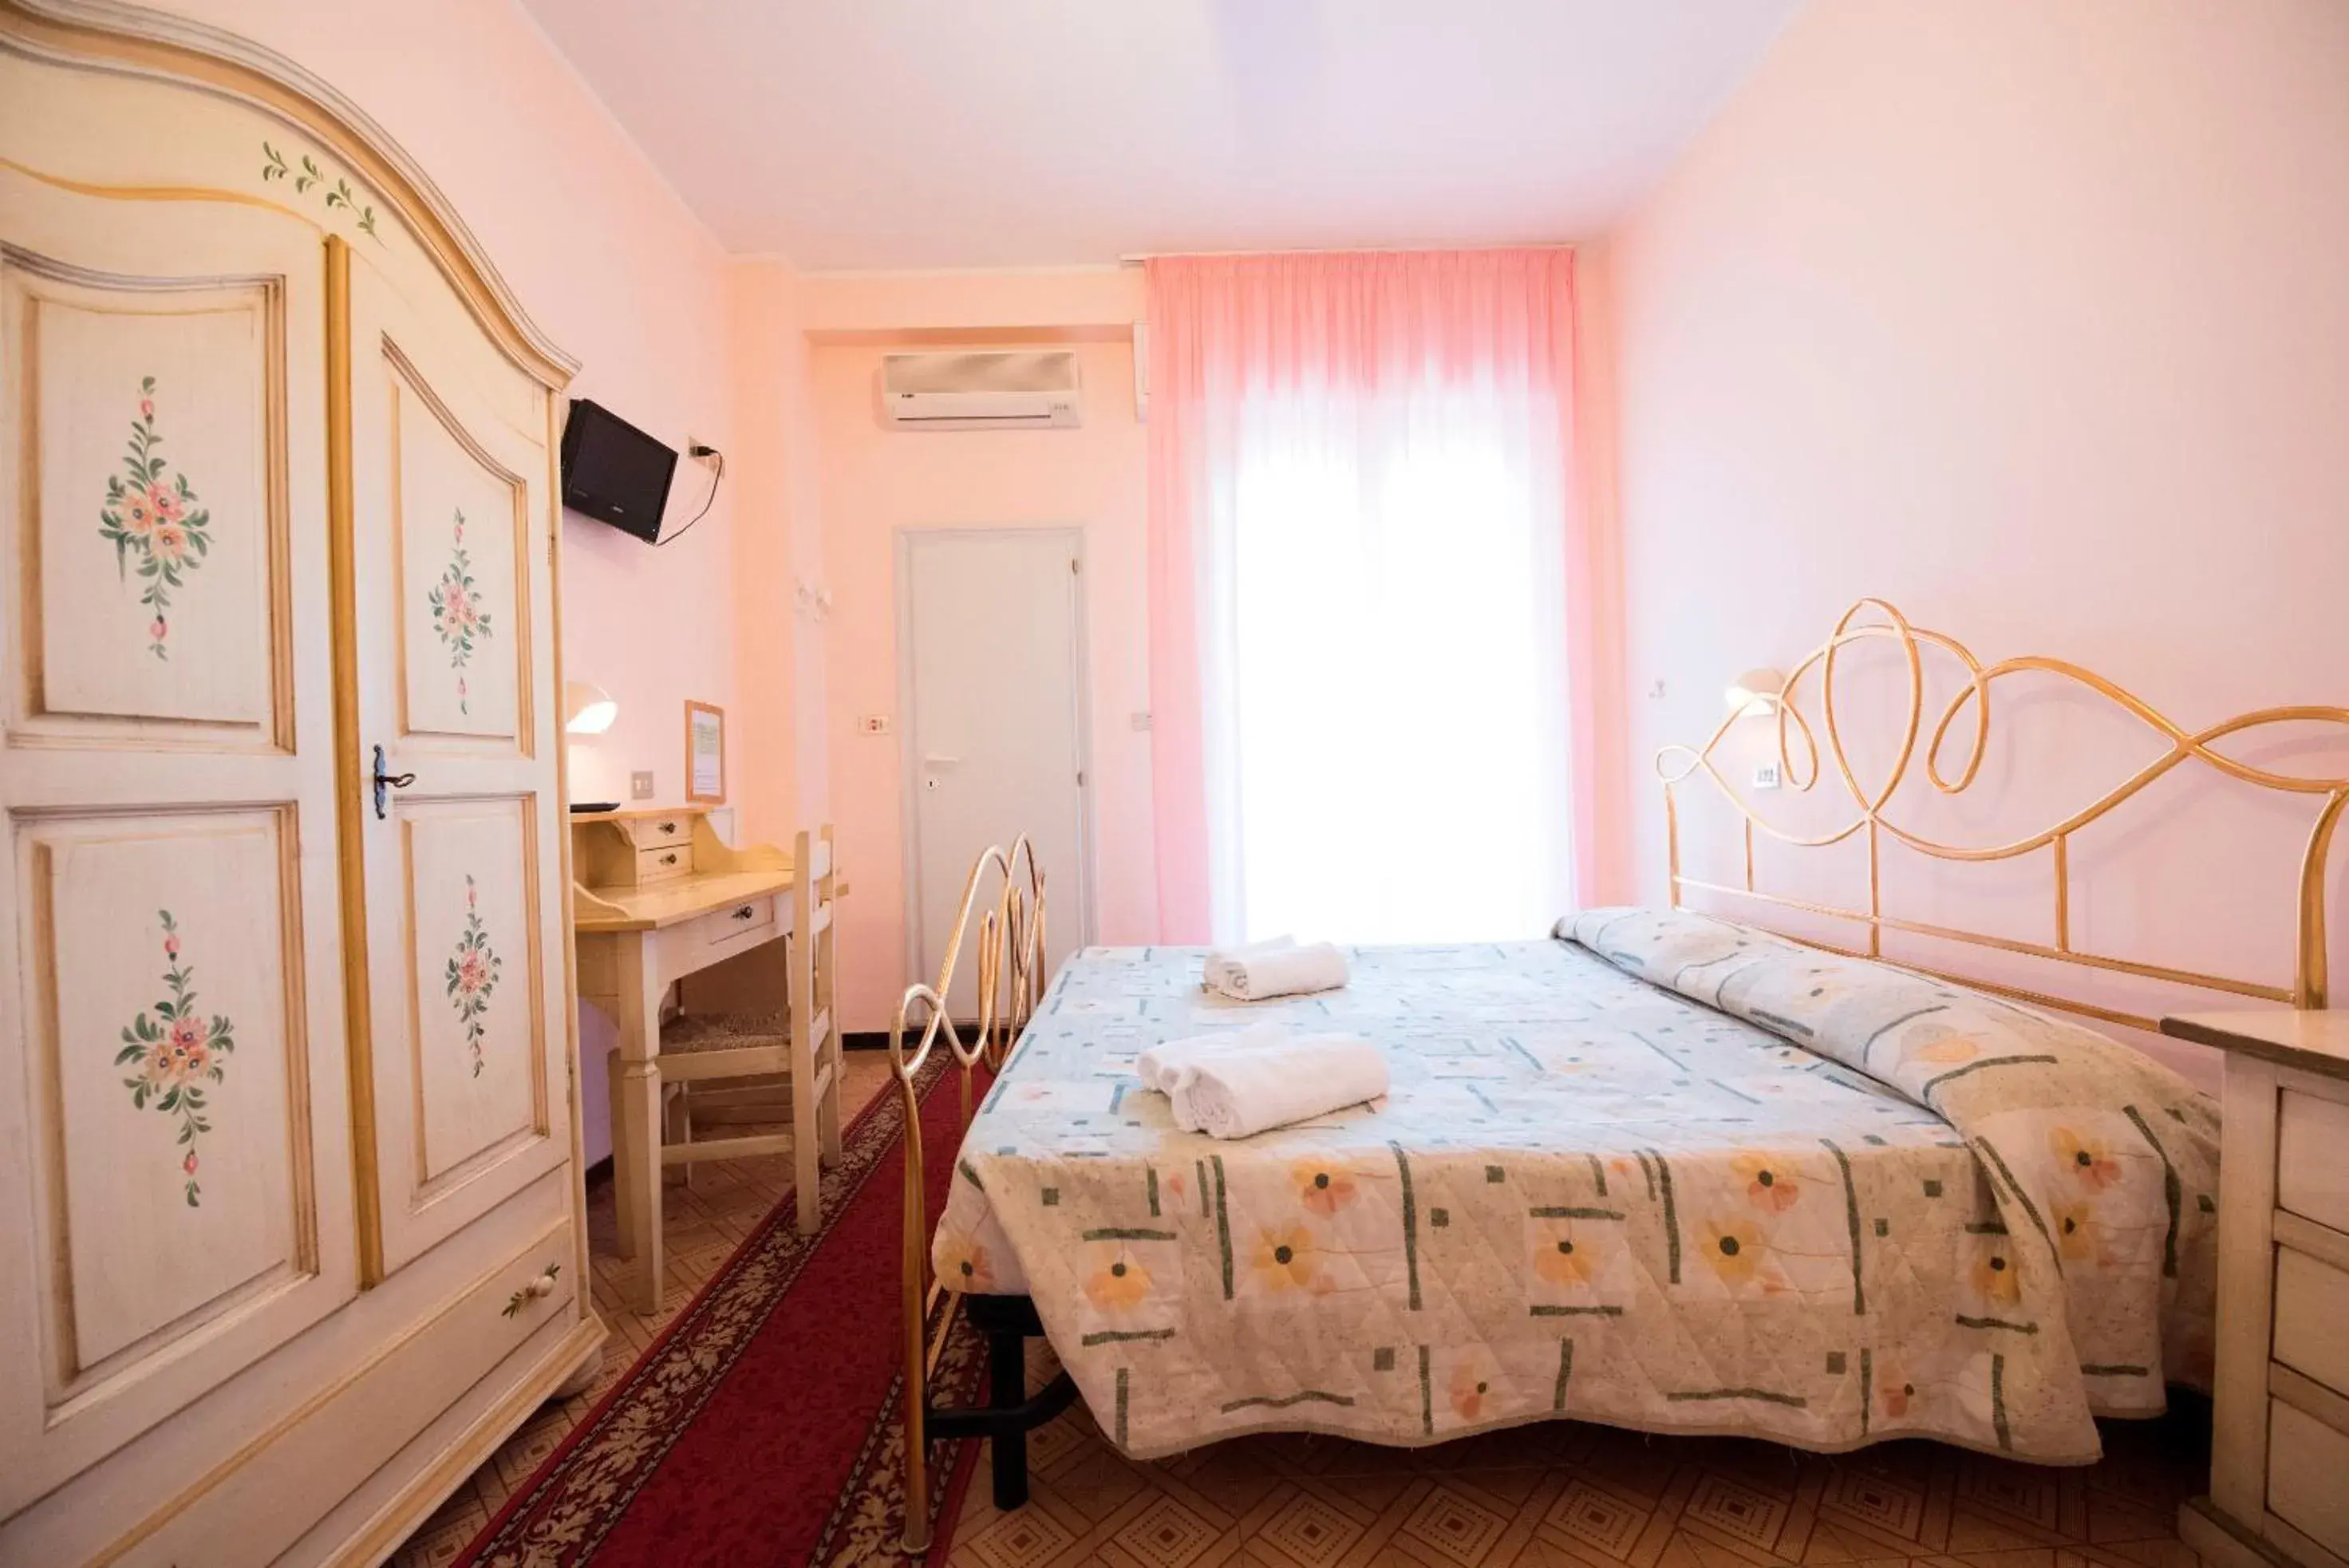 Bedroom, Room Photo in Hotel Settebello B&B